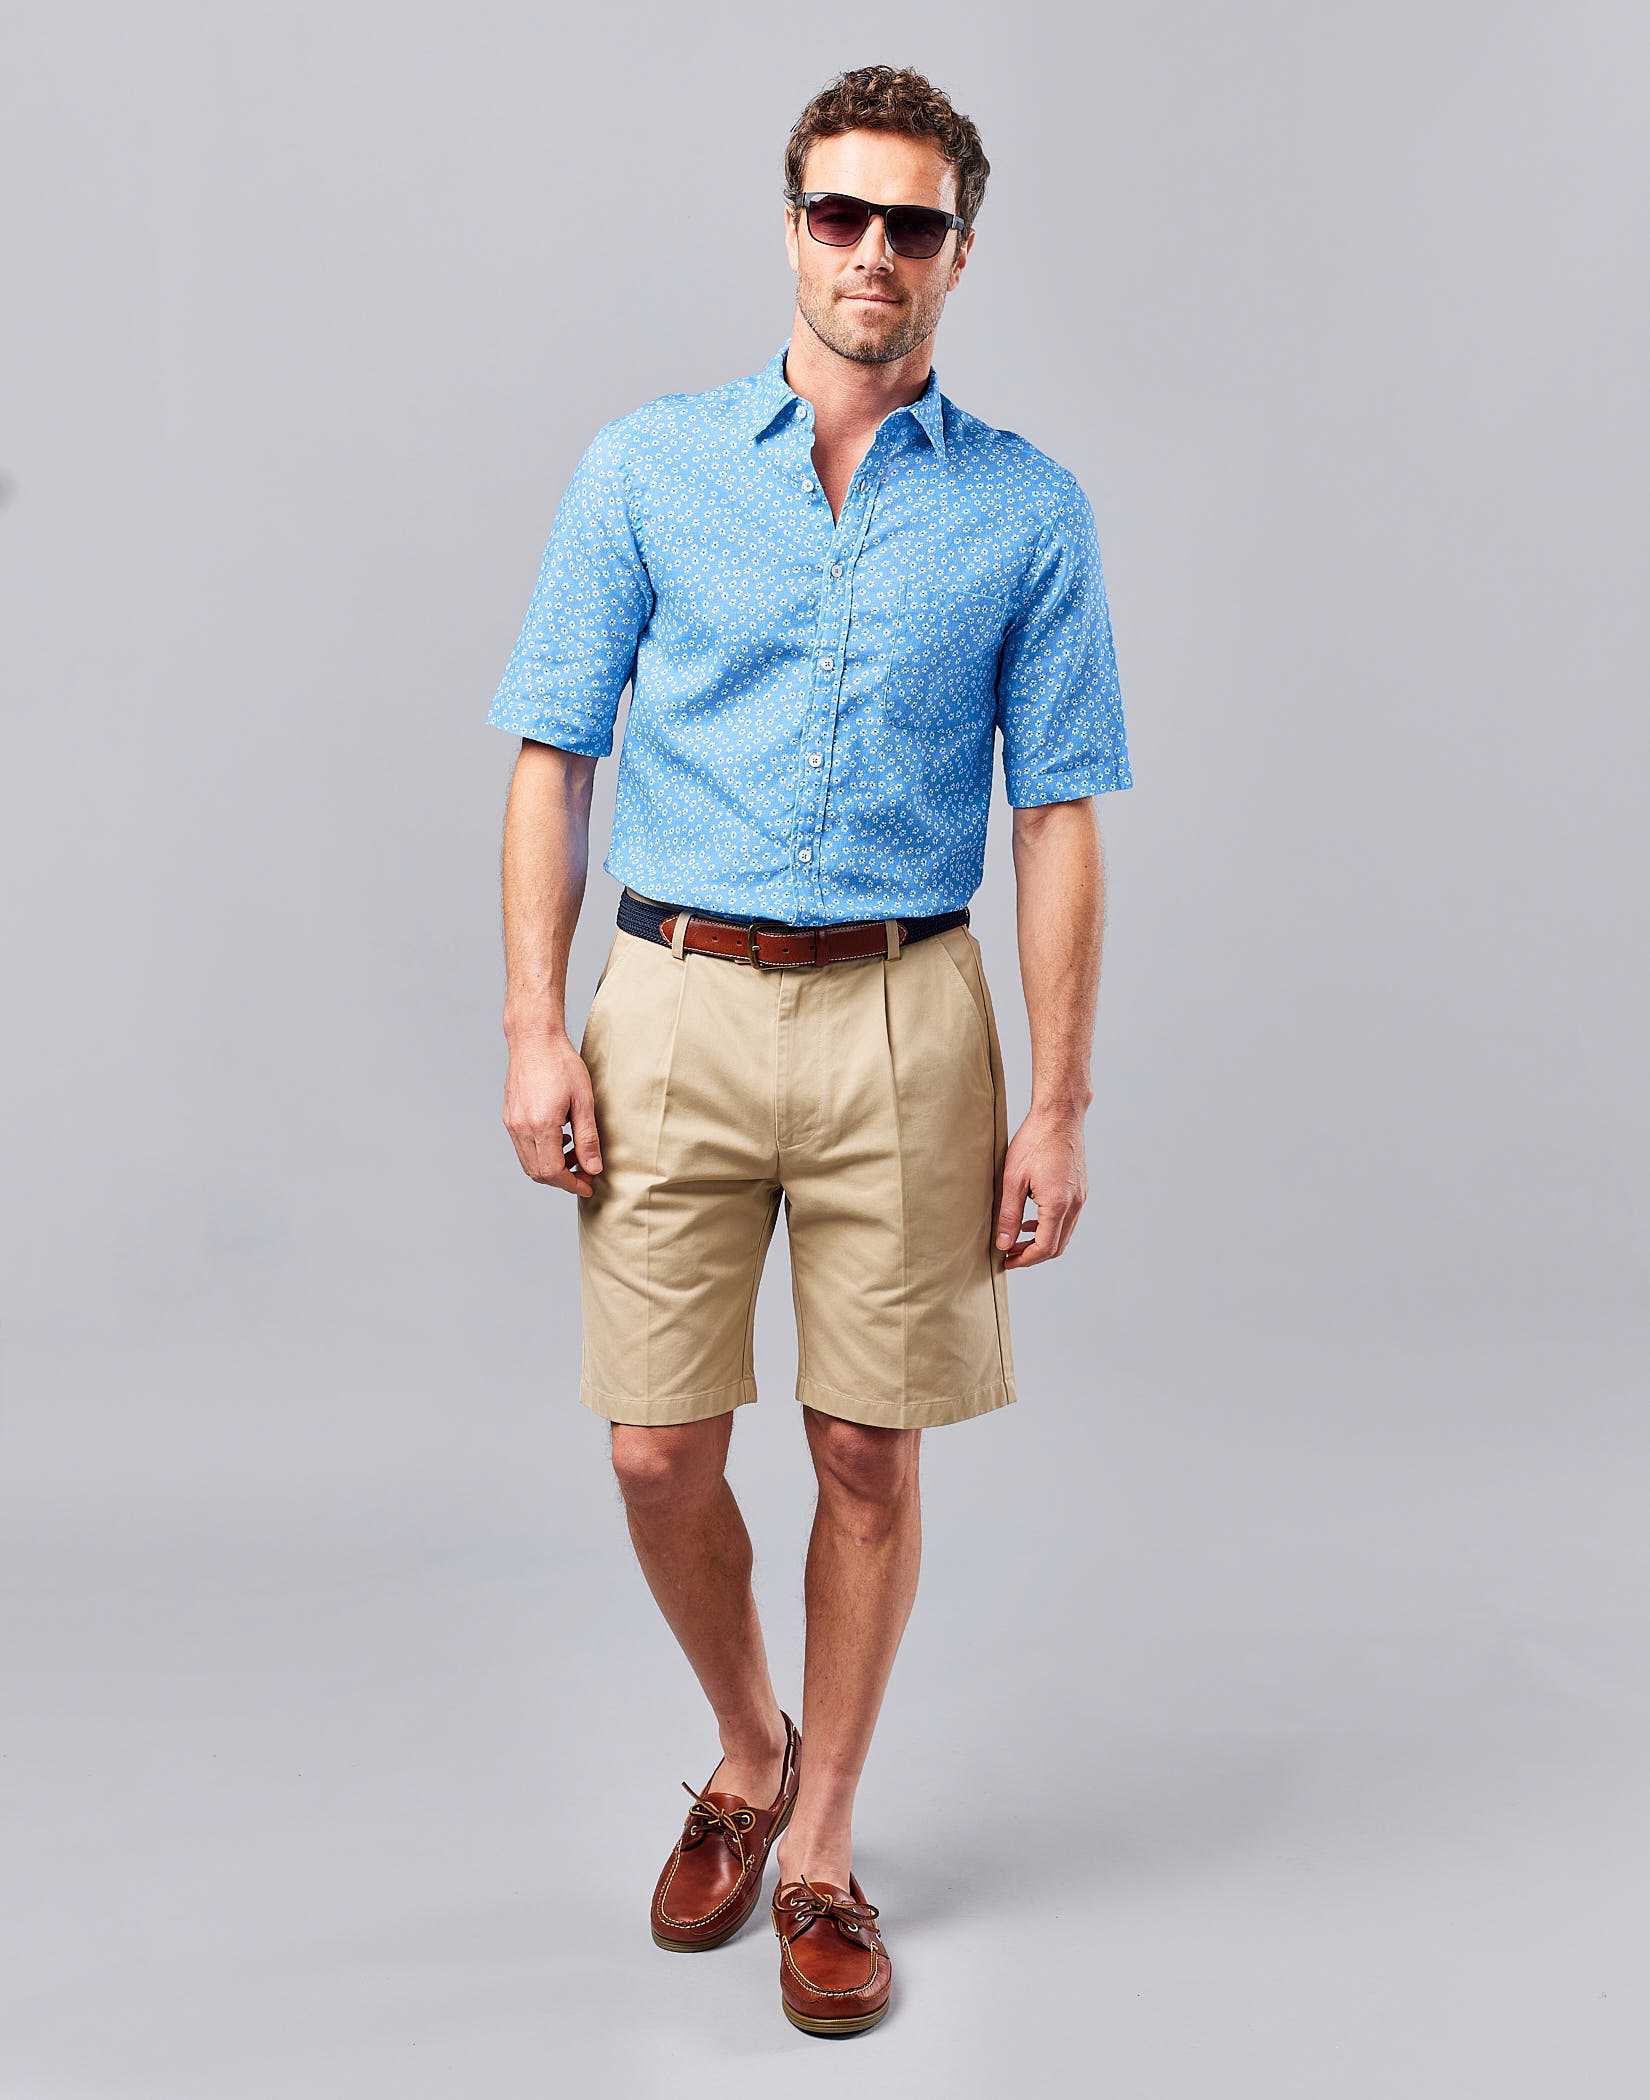 Men’s dress shorts: Dapper and Dashing缩略图